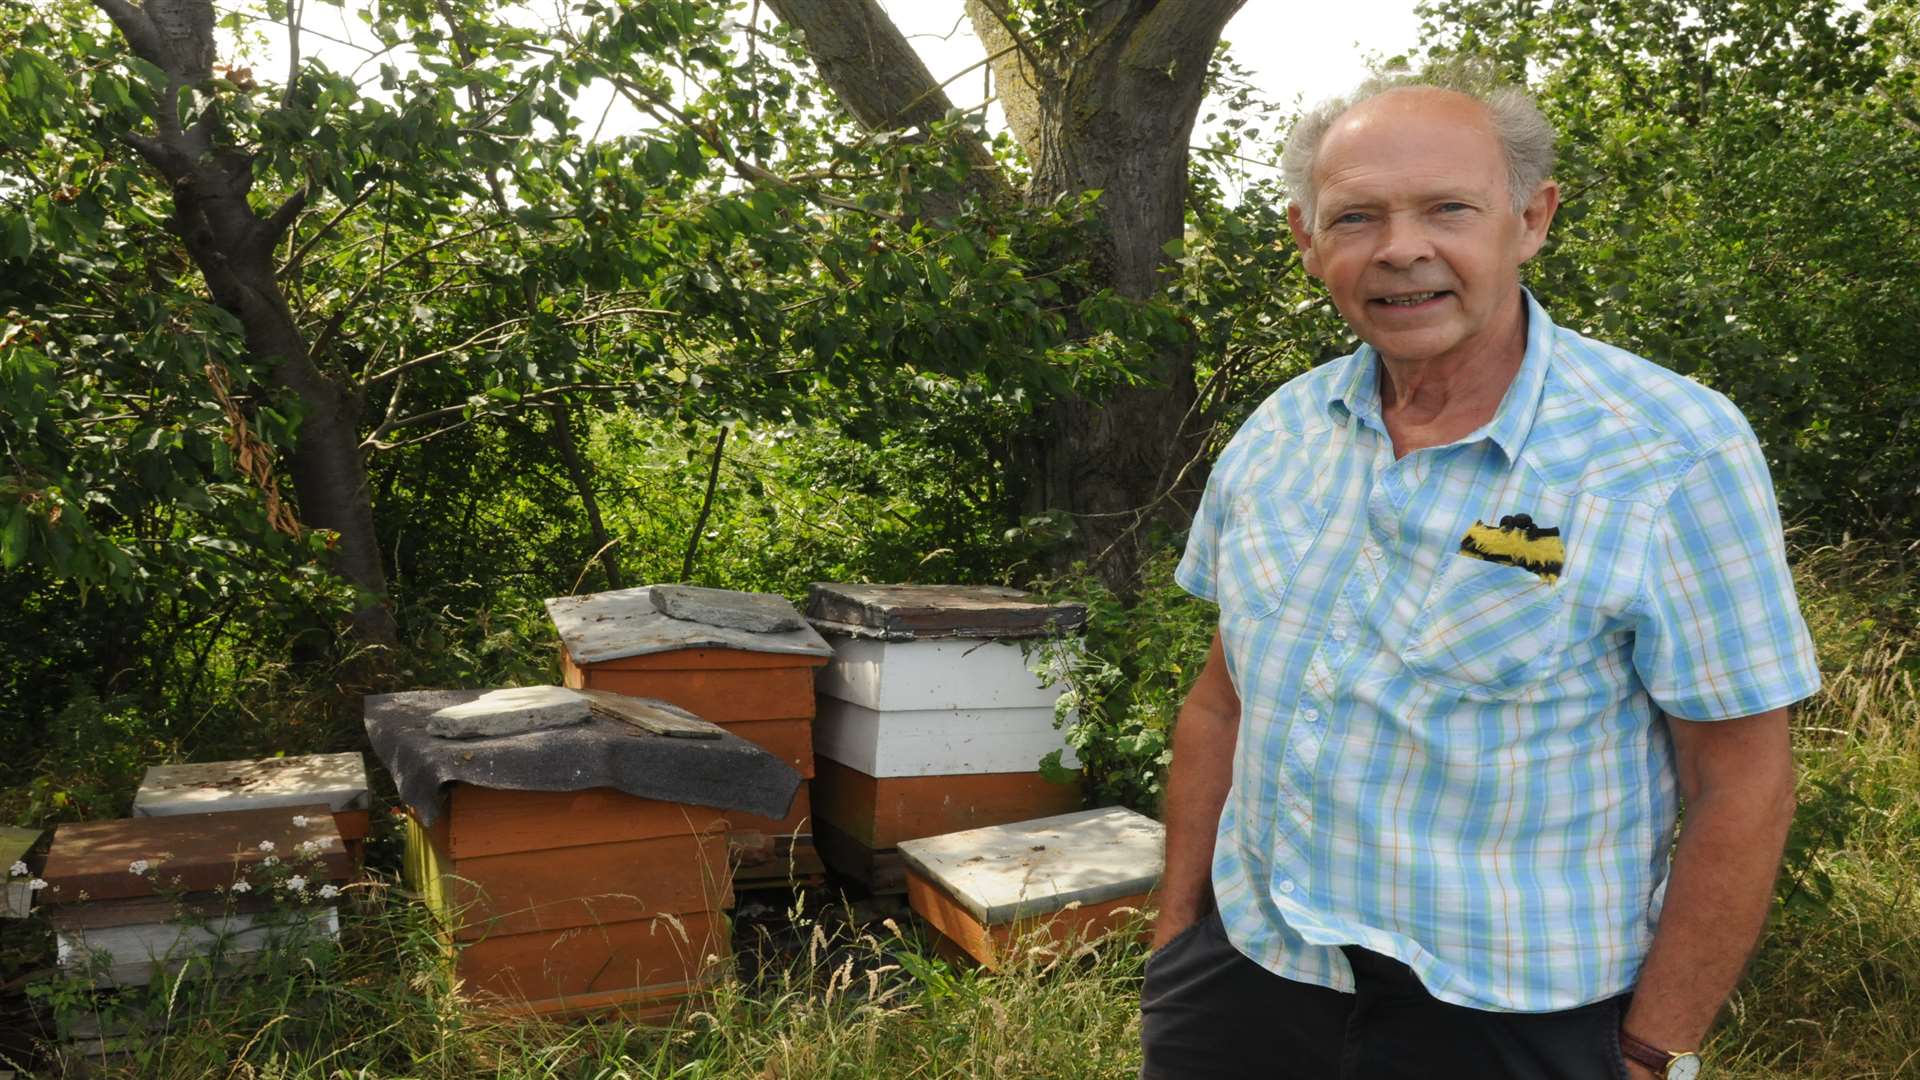 Tony Jeffery is selling his bee hives